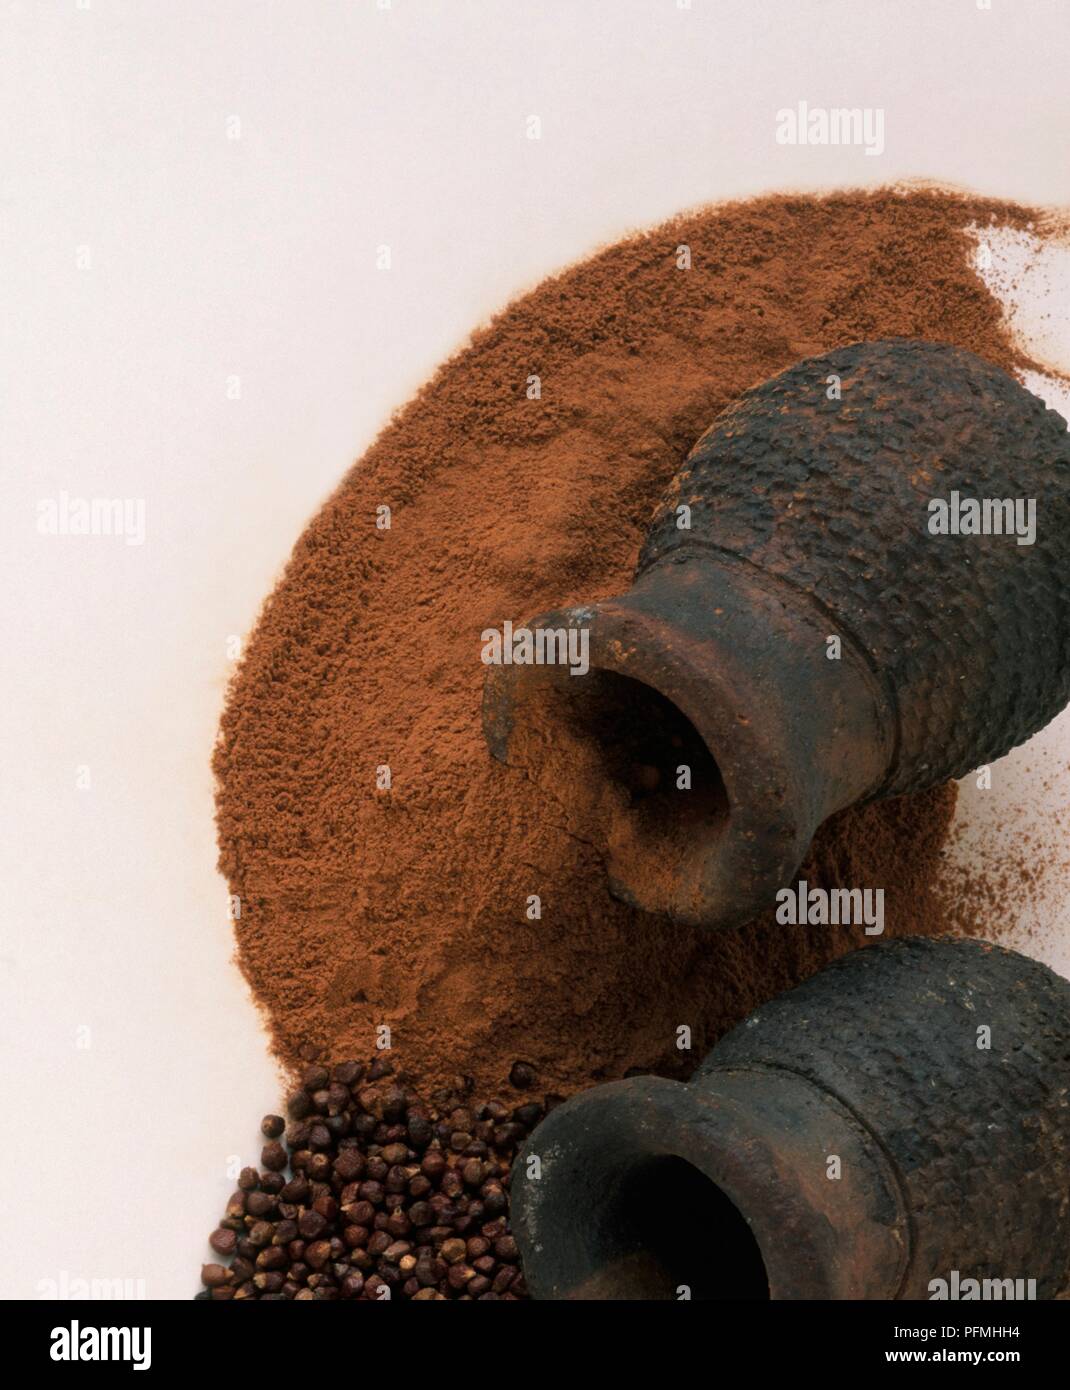 Powdered Cola acuminata (Kola nut) and Aframomum melegueta (Grains of paradise) spilling out of clay jars Stock Photo